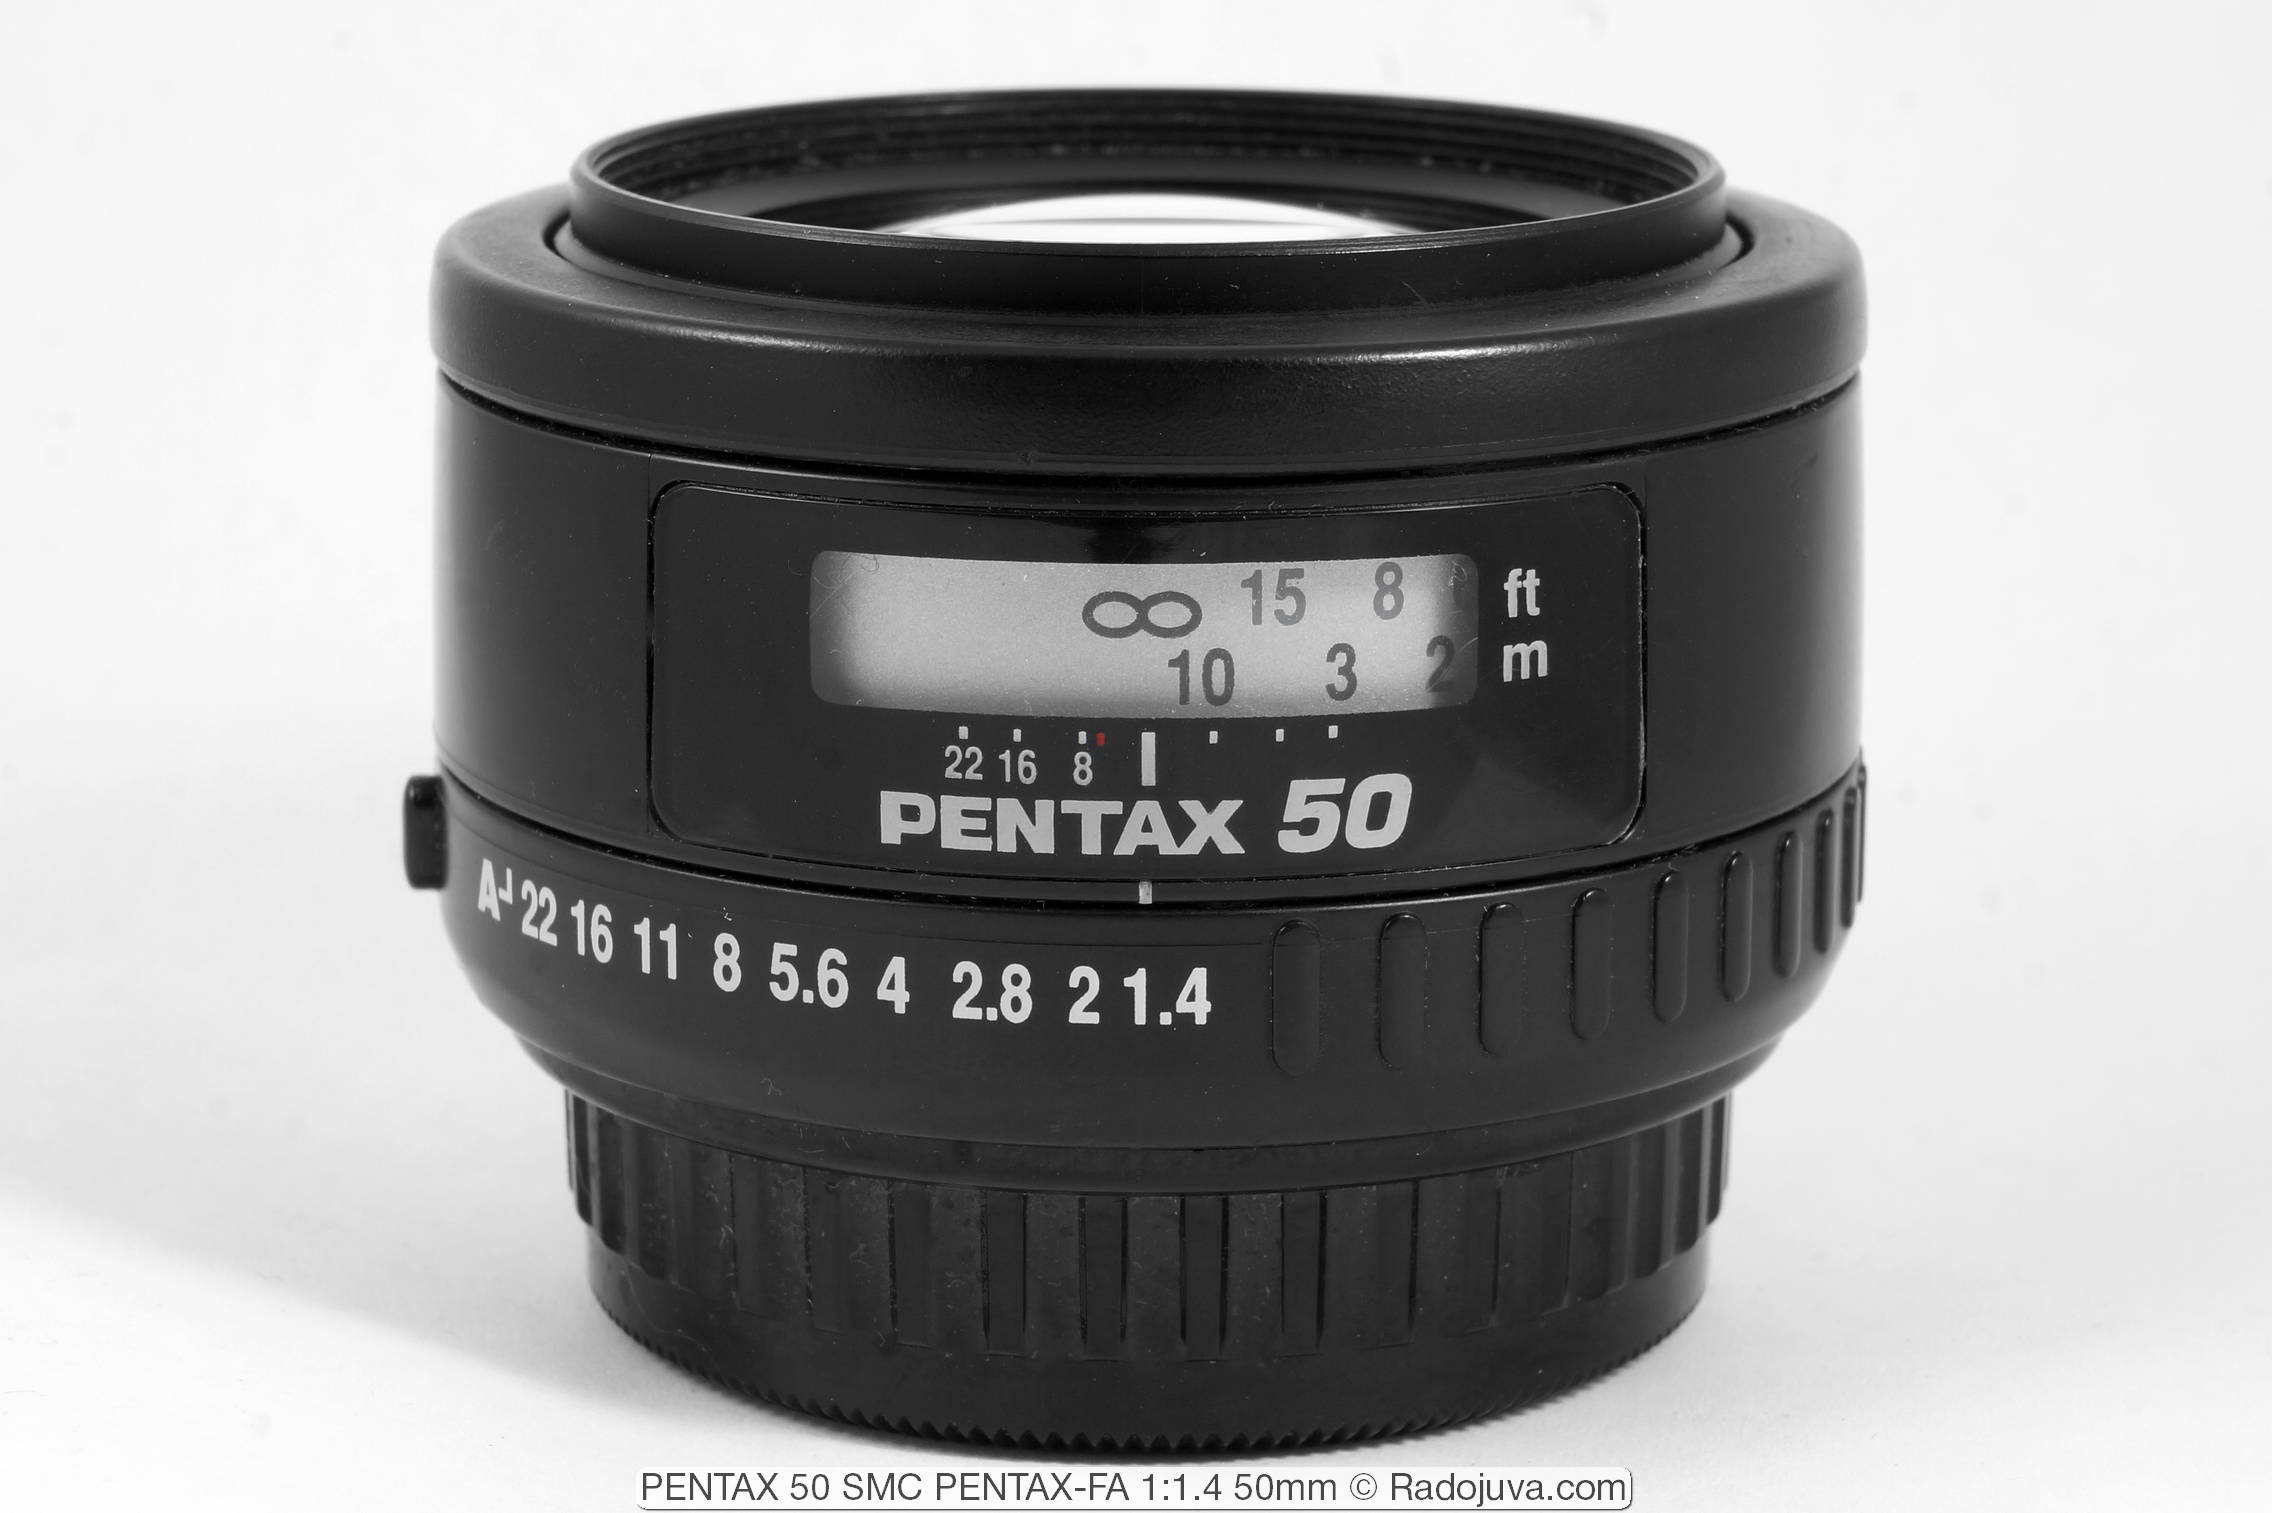 PENTAX 50 SMC PENTAX-FA 1:1.4 50mm